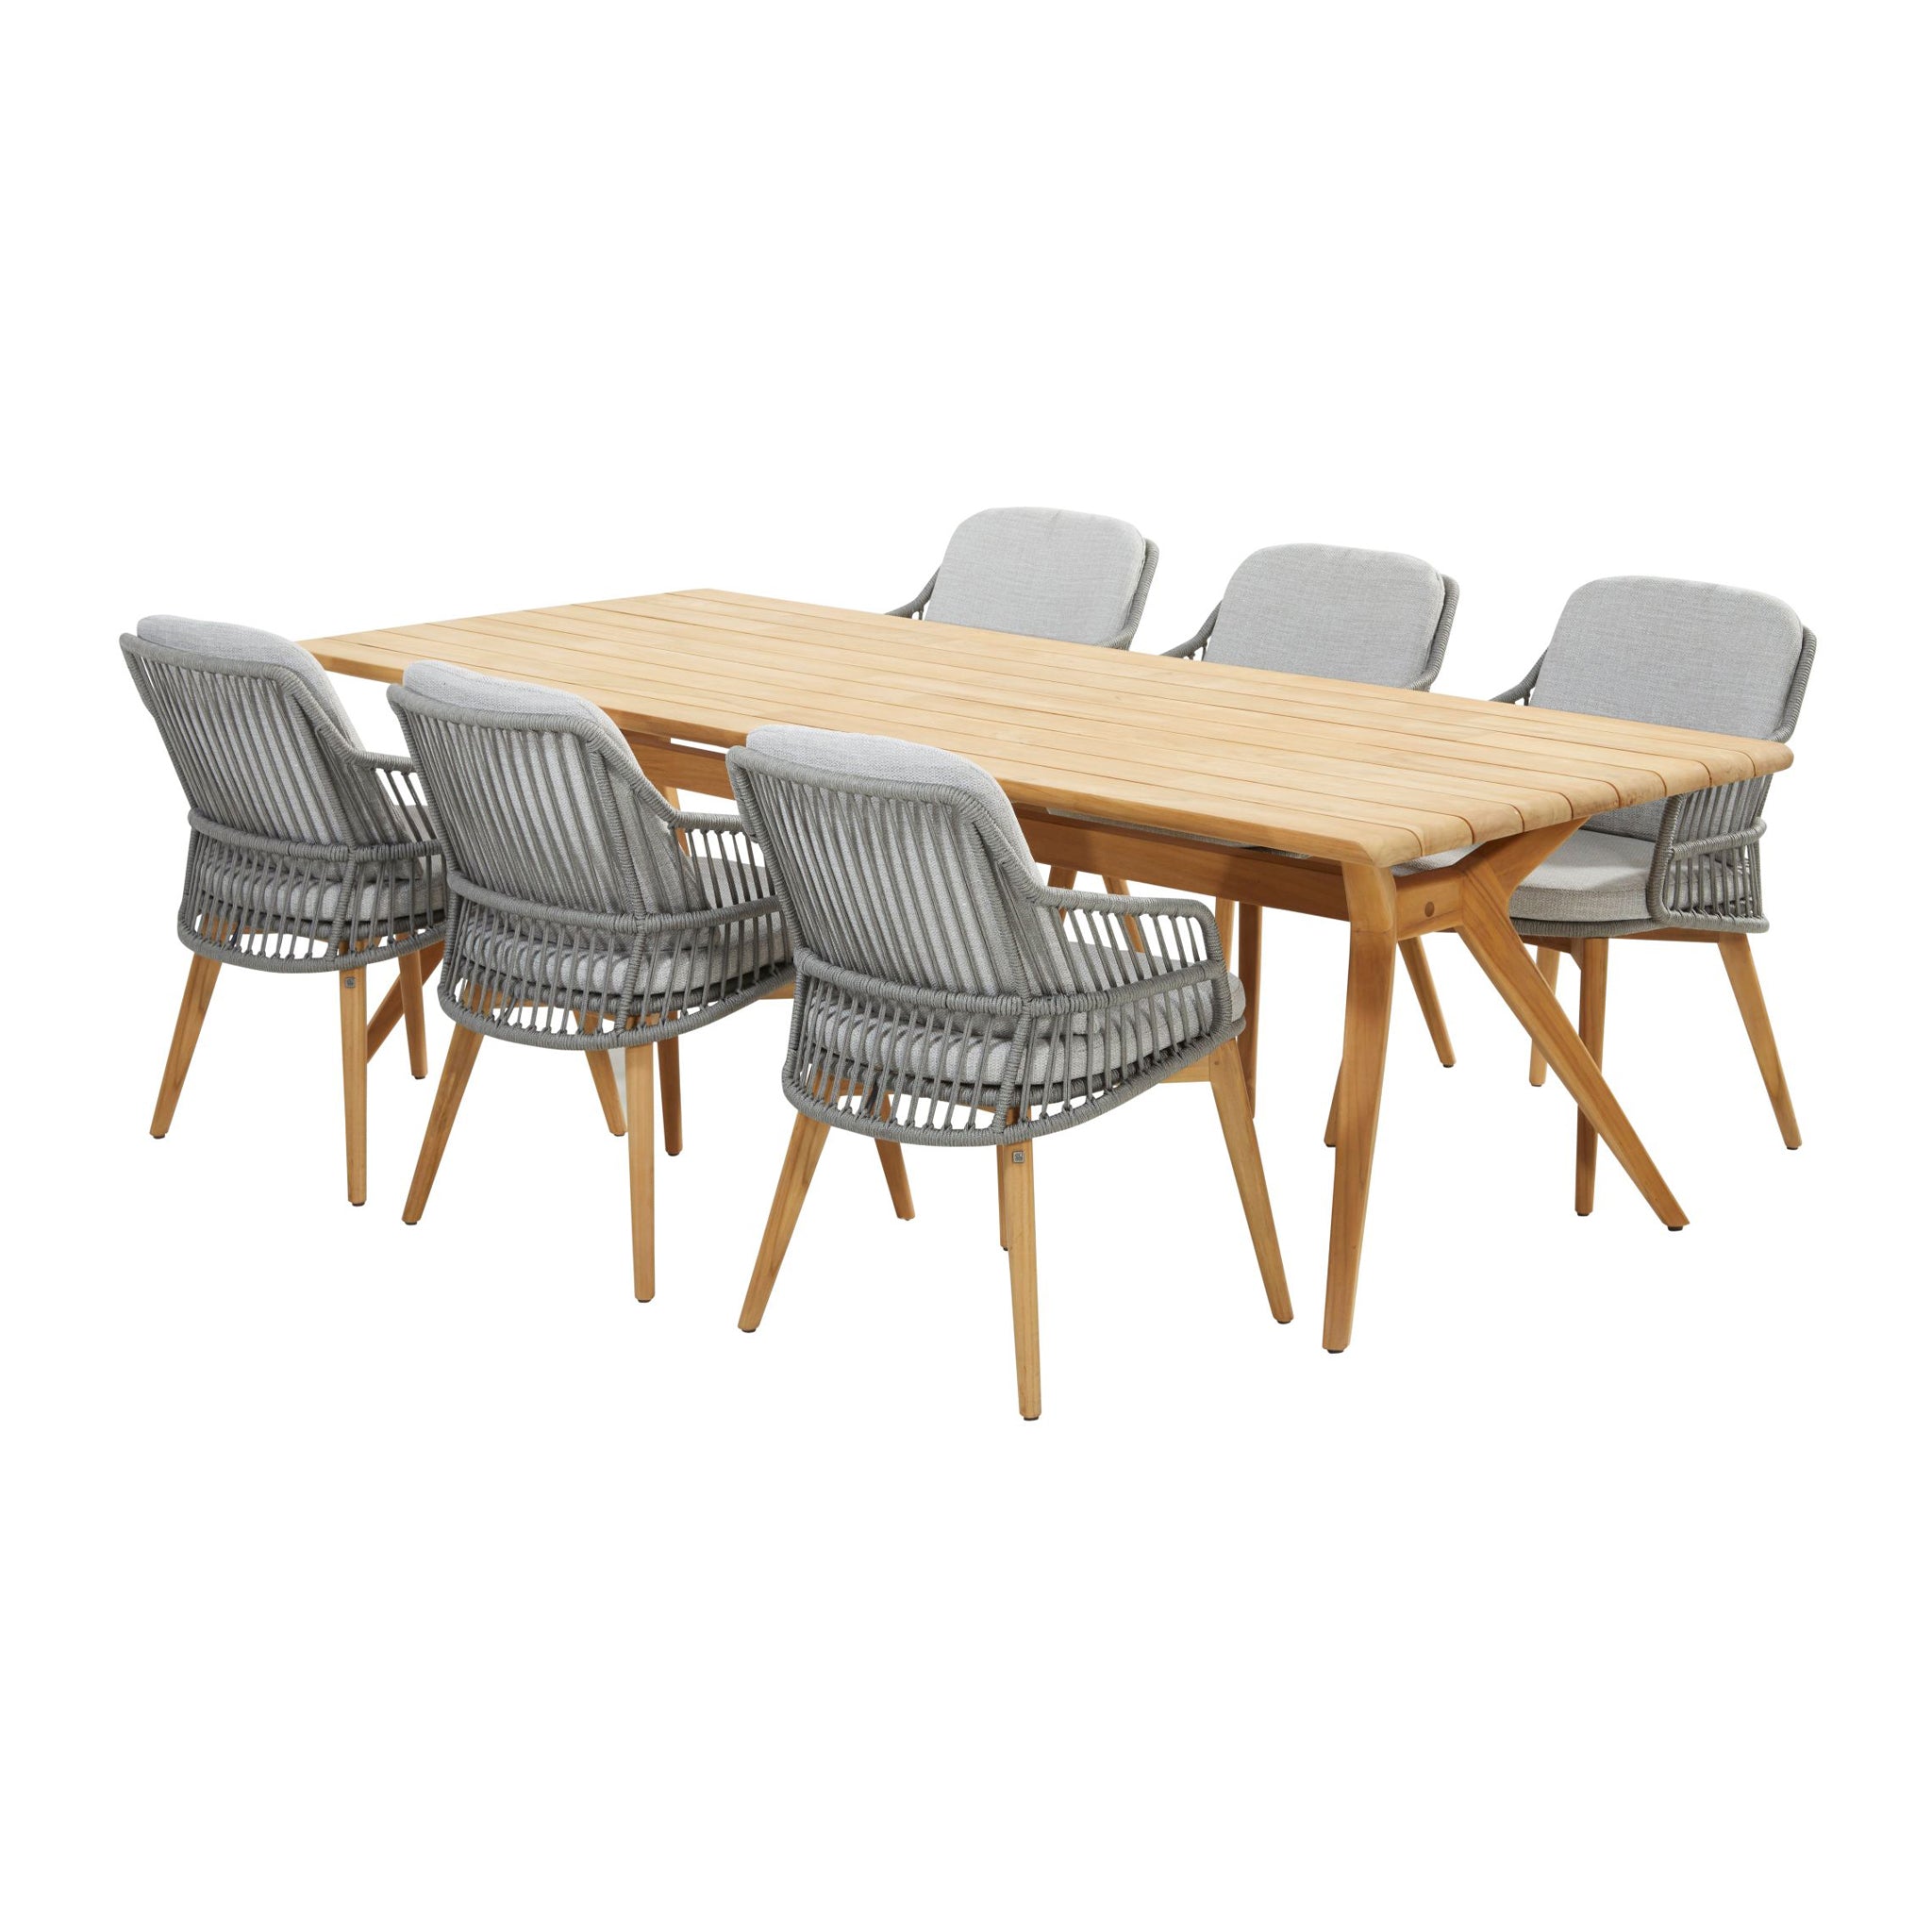 Sempre 6 Seat Rectangular Dining Set with Teak Table in Light Grey